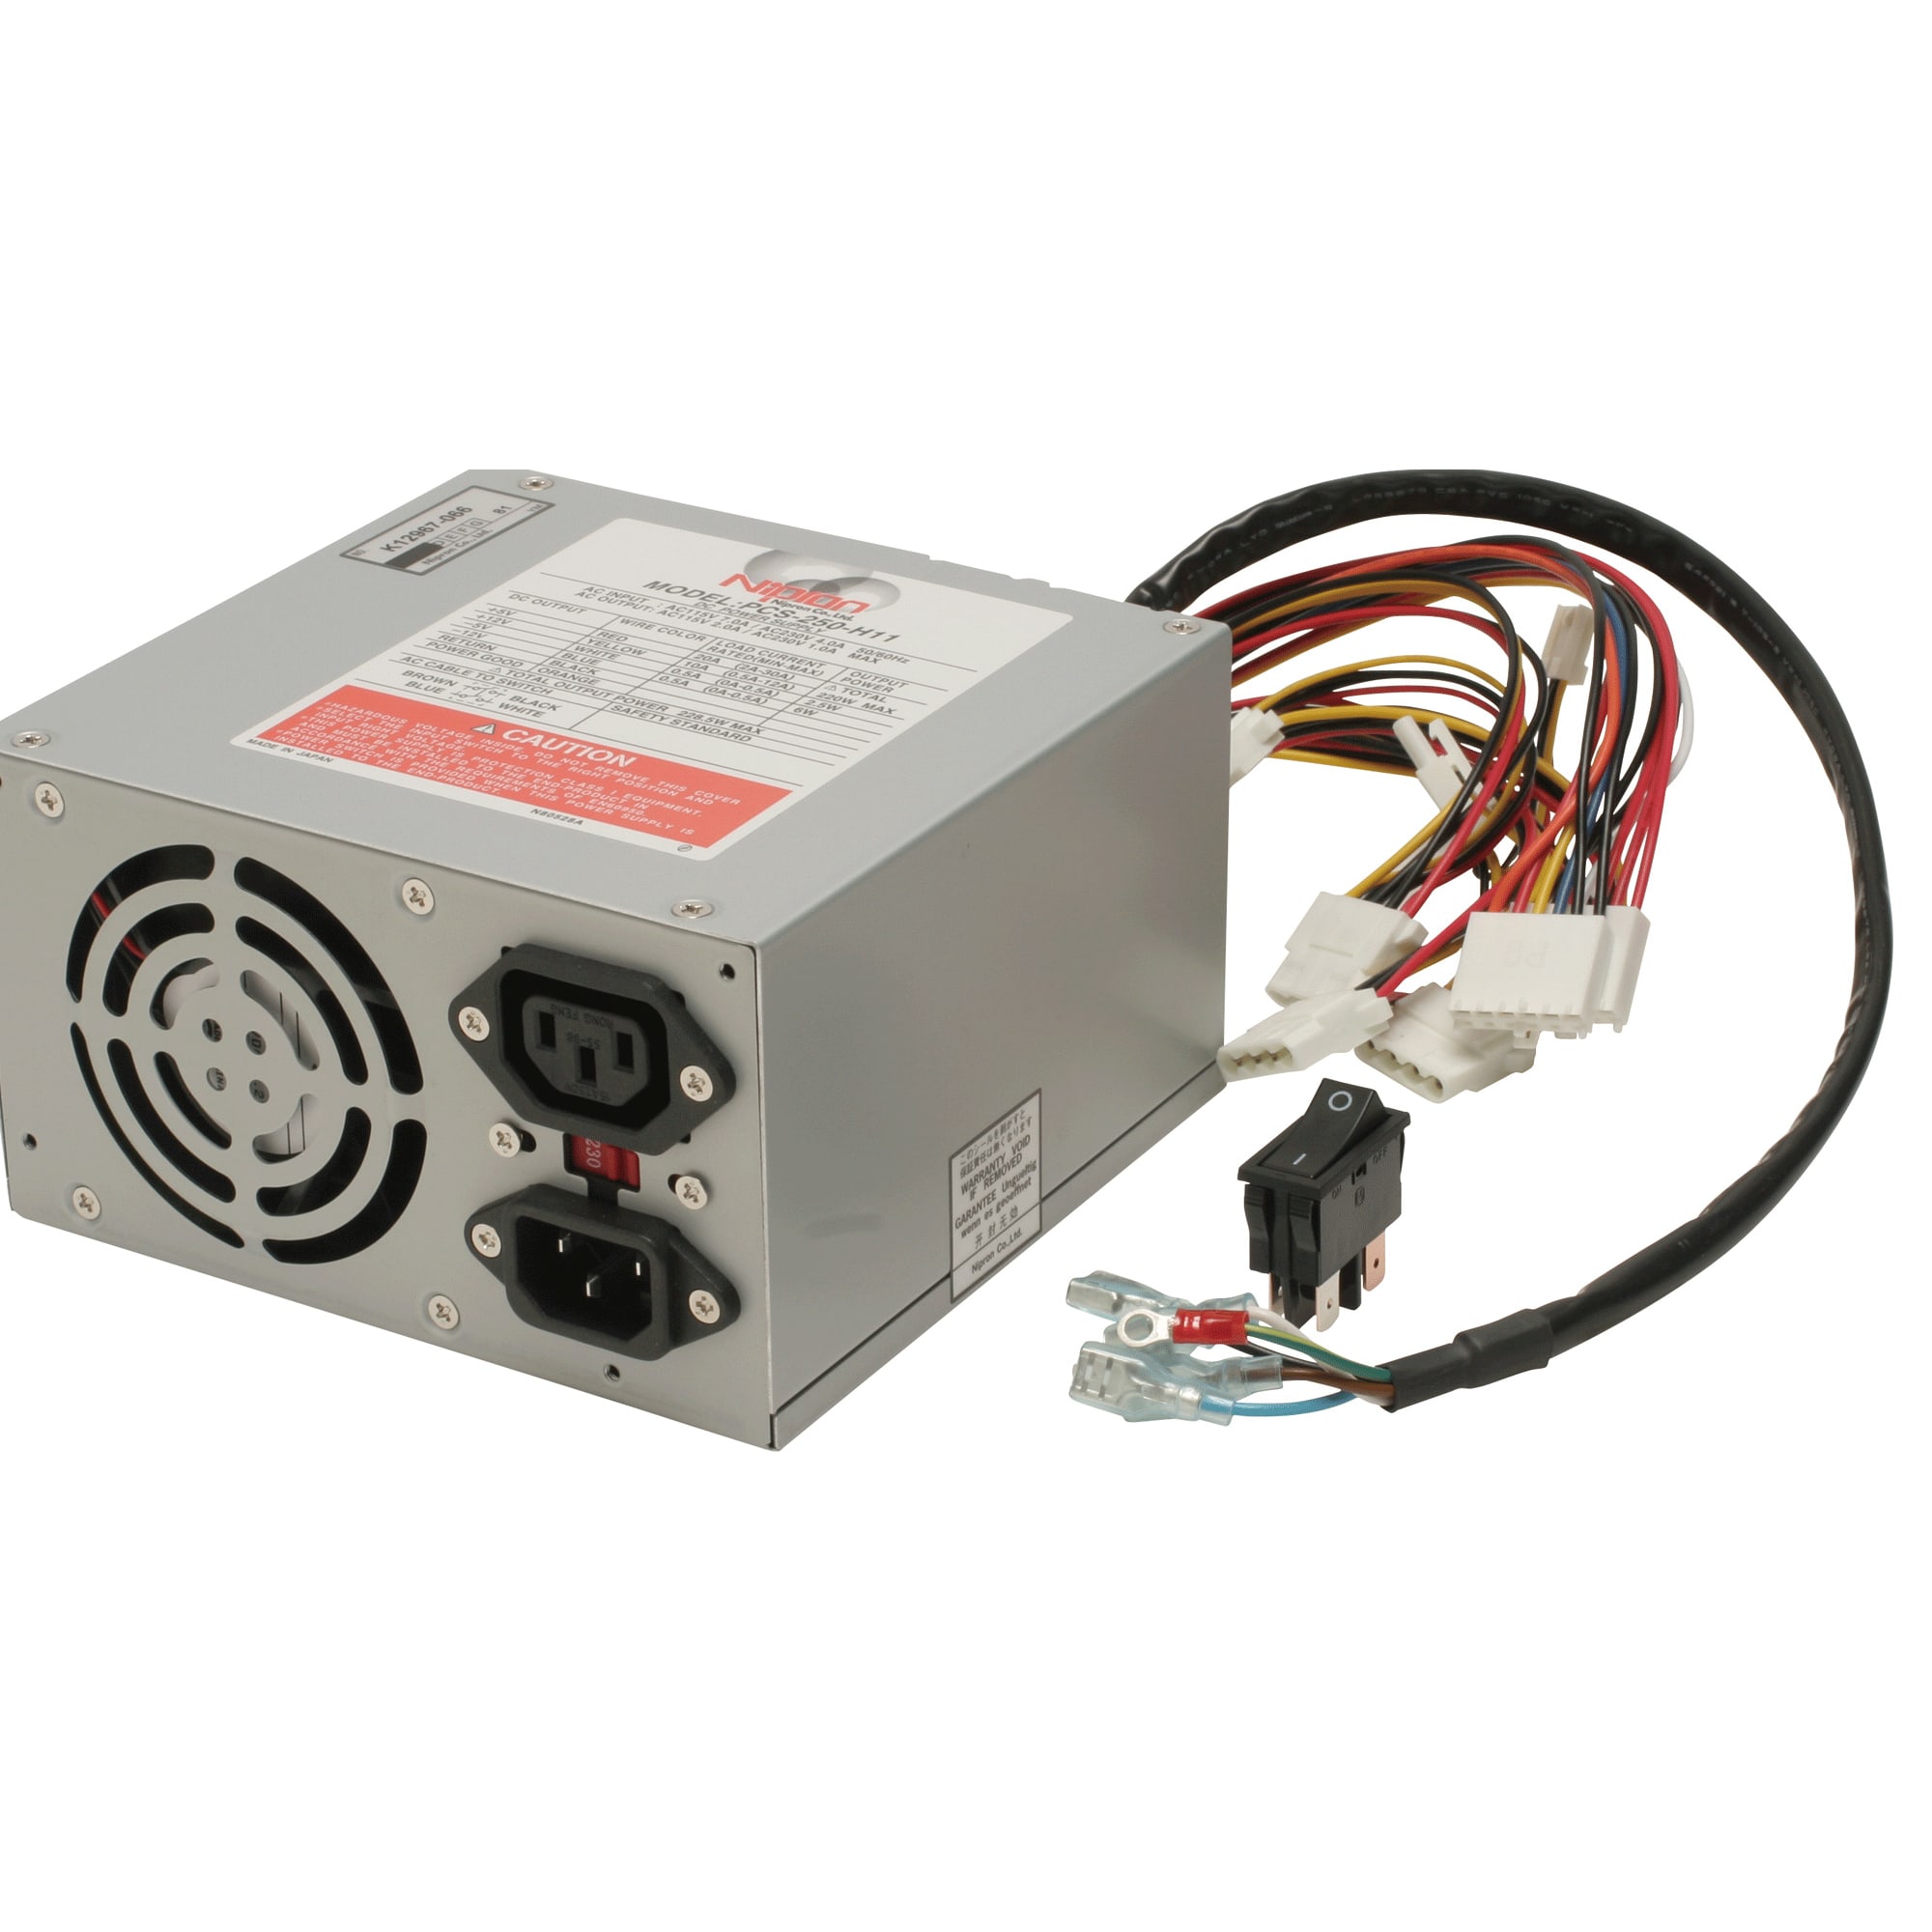 PC Power Supplies - PS/2, 250W | MISUMI | MISUMI